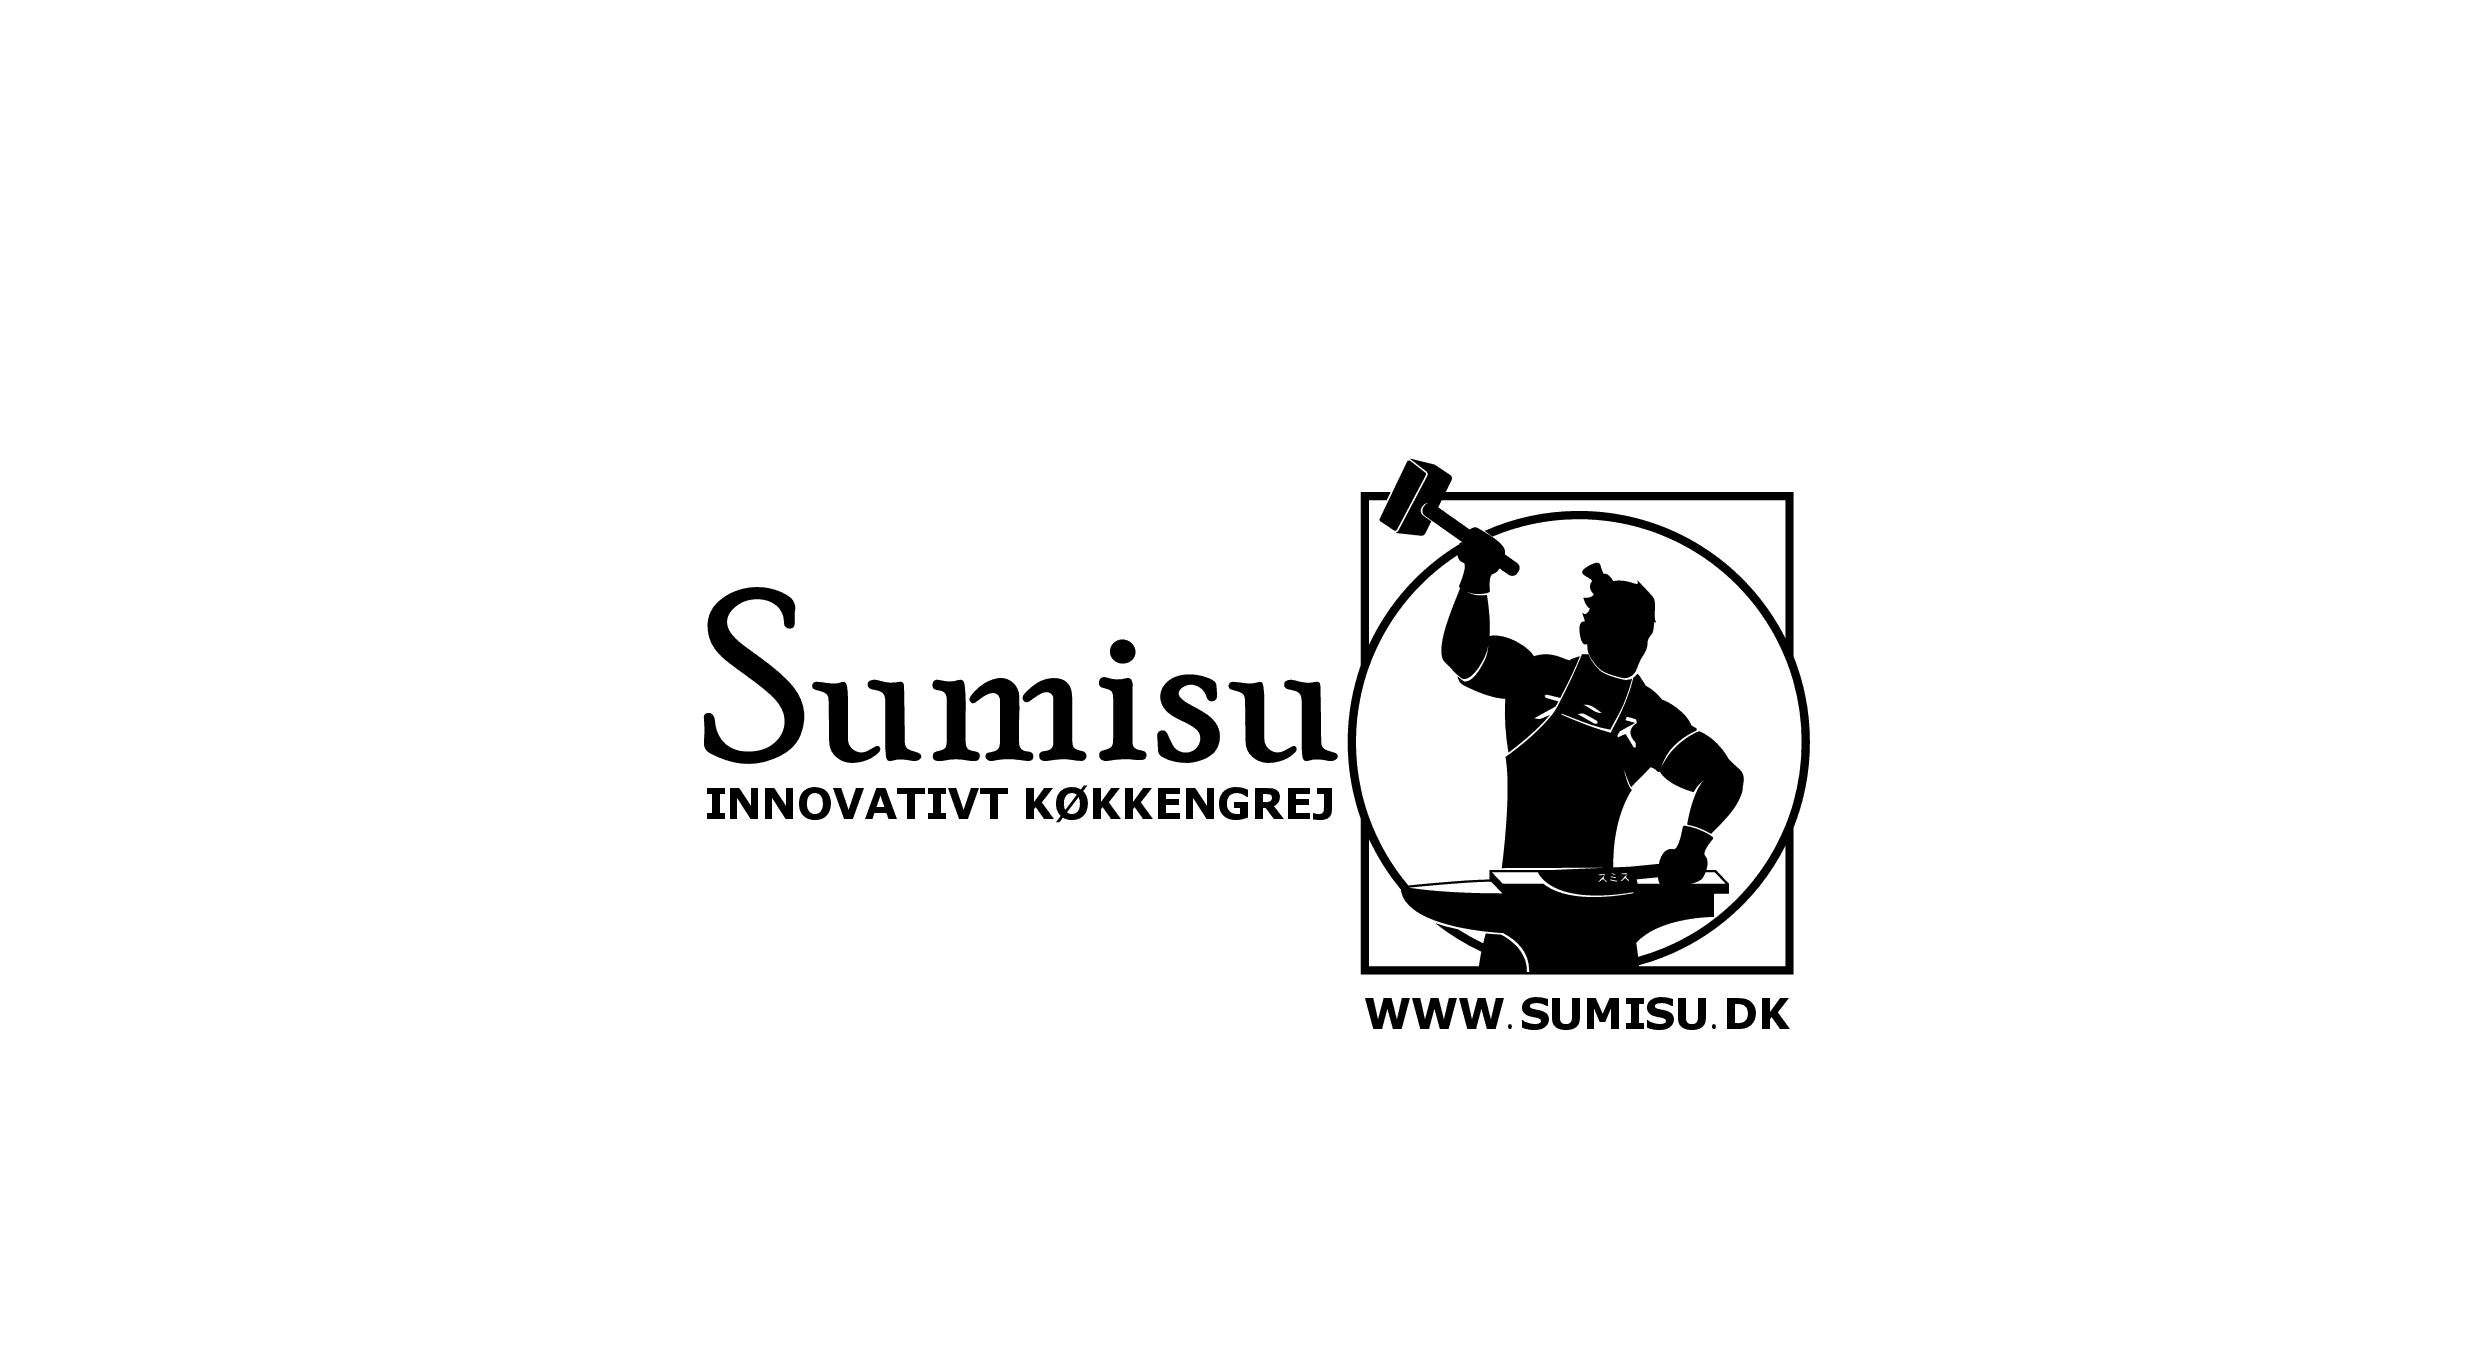 Sumisu logo Innovativt kokkengrej page 0